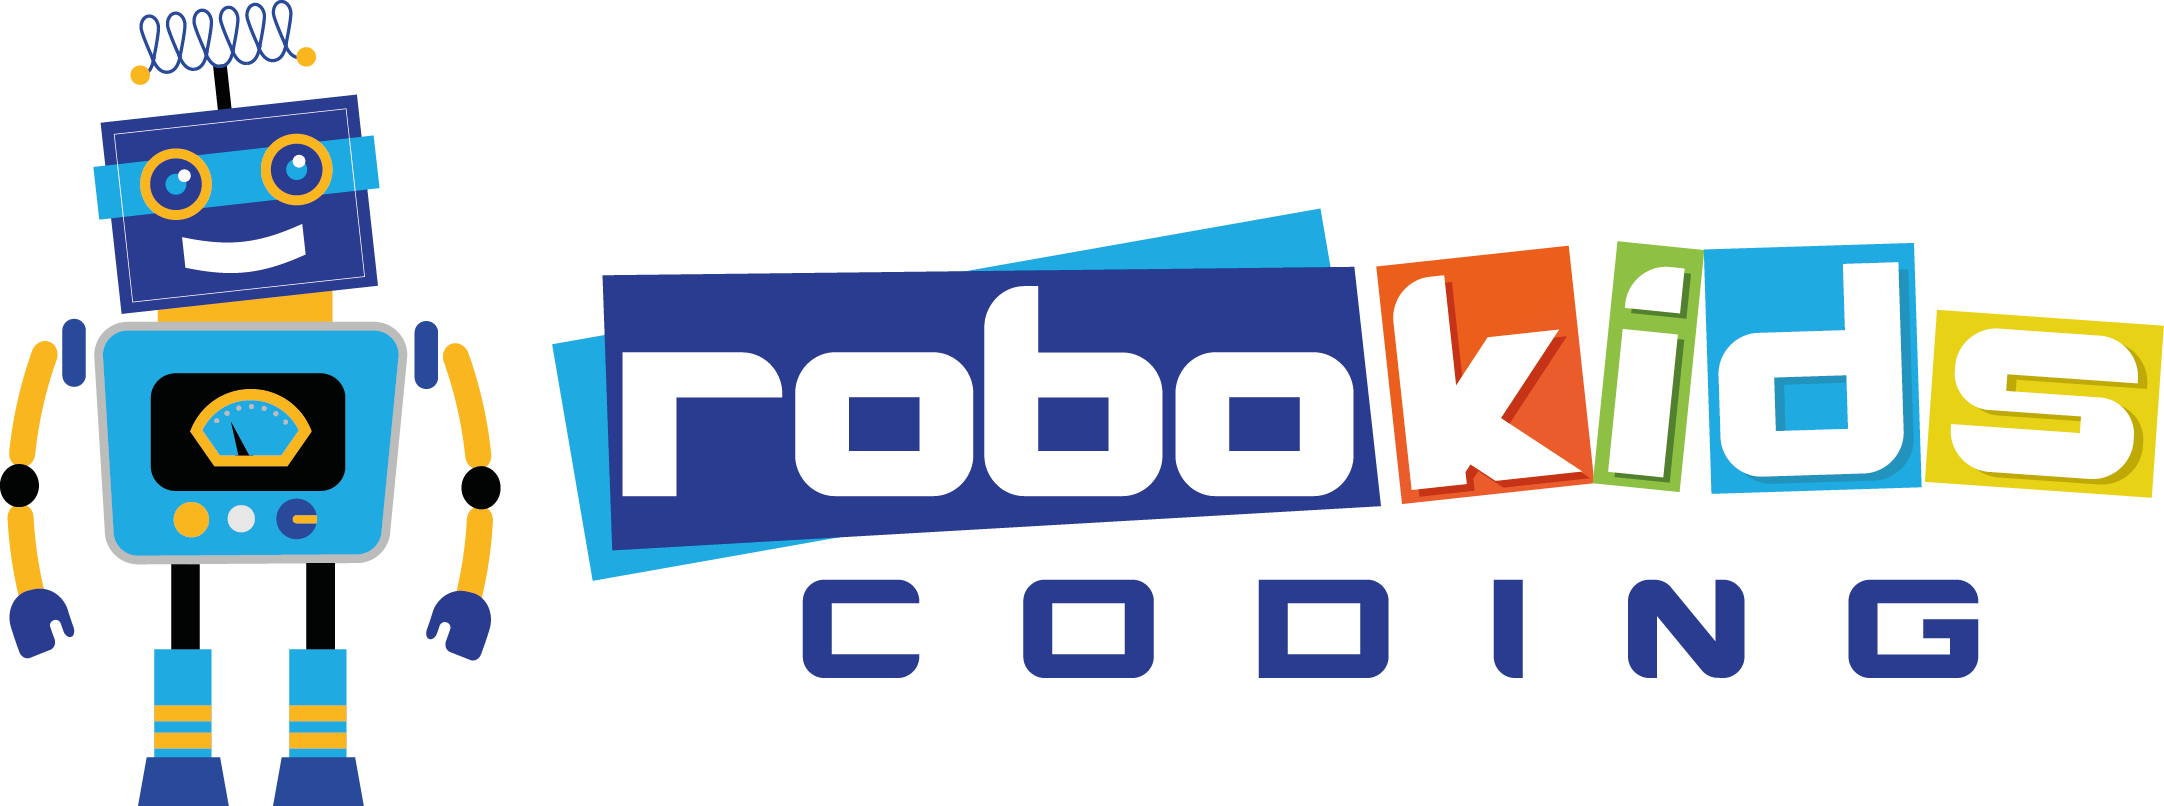 Robokids Coding LTD